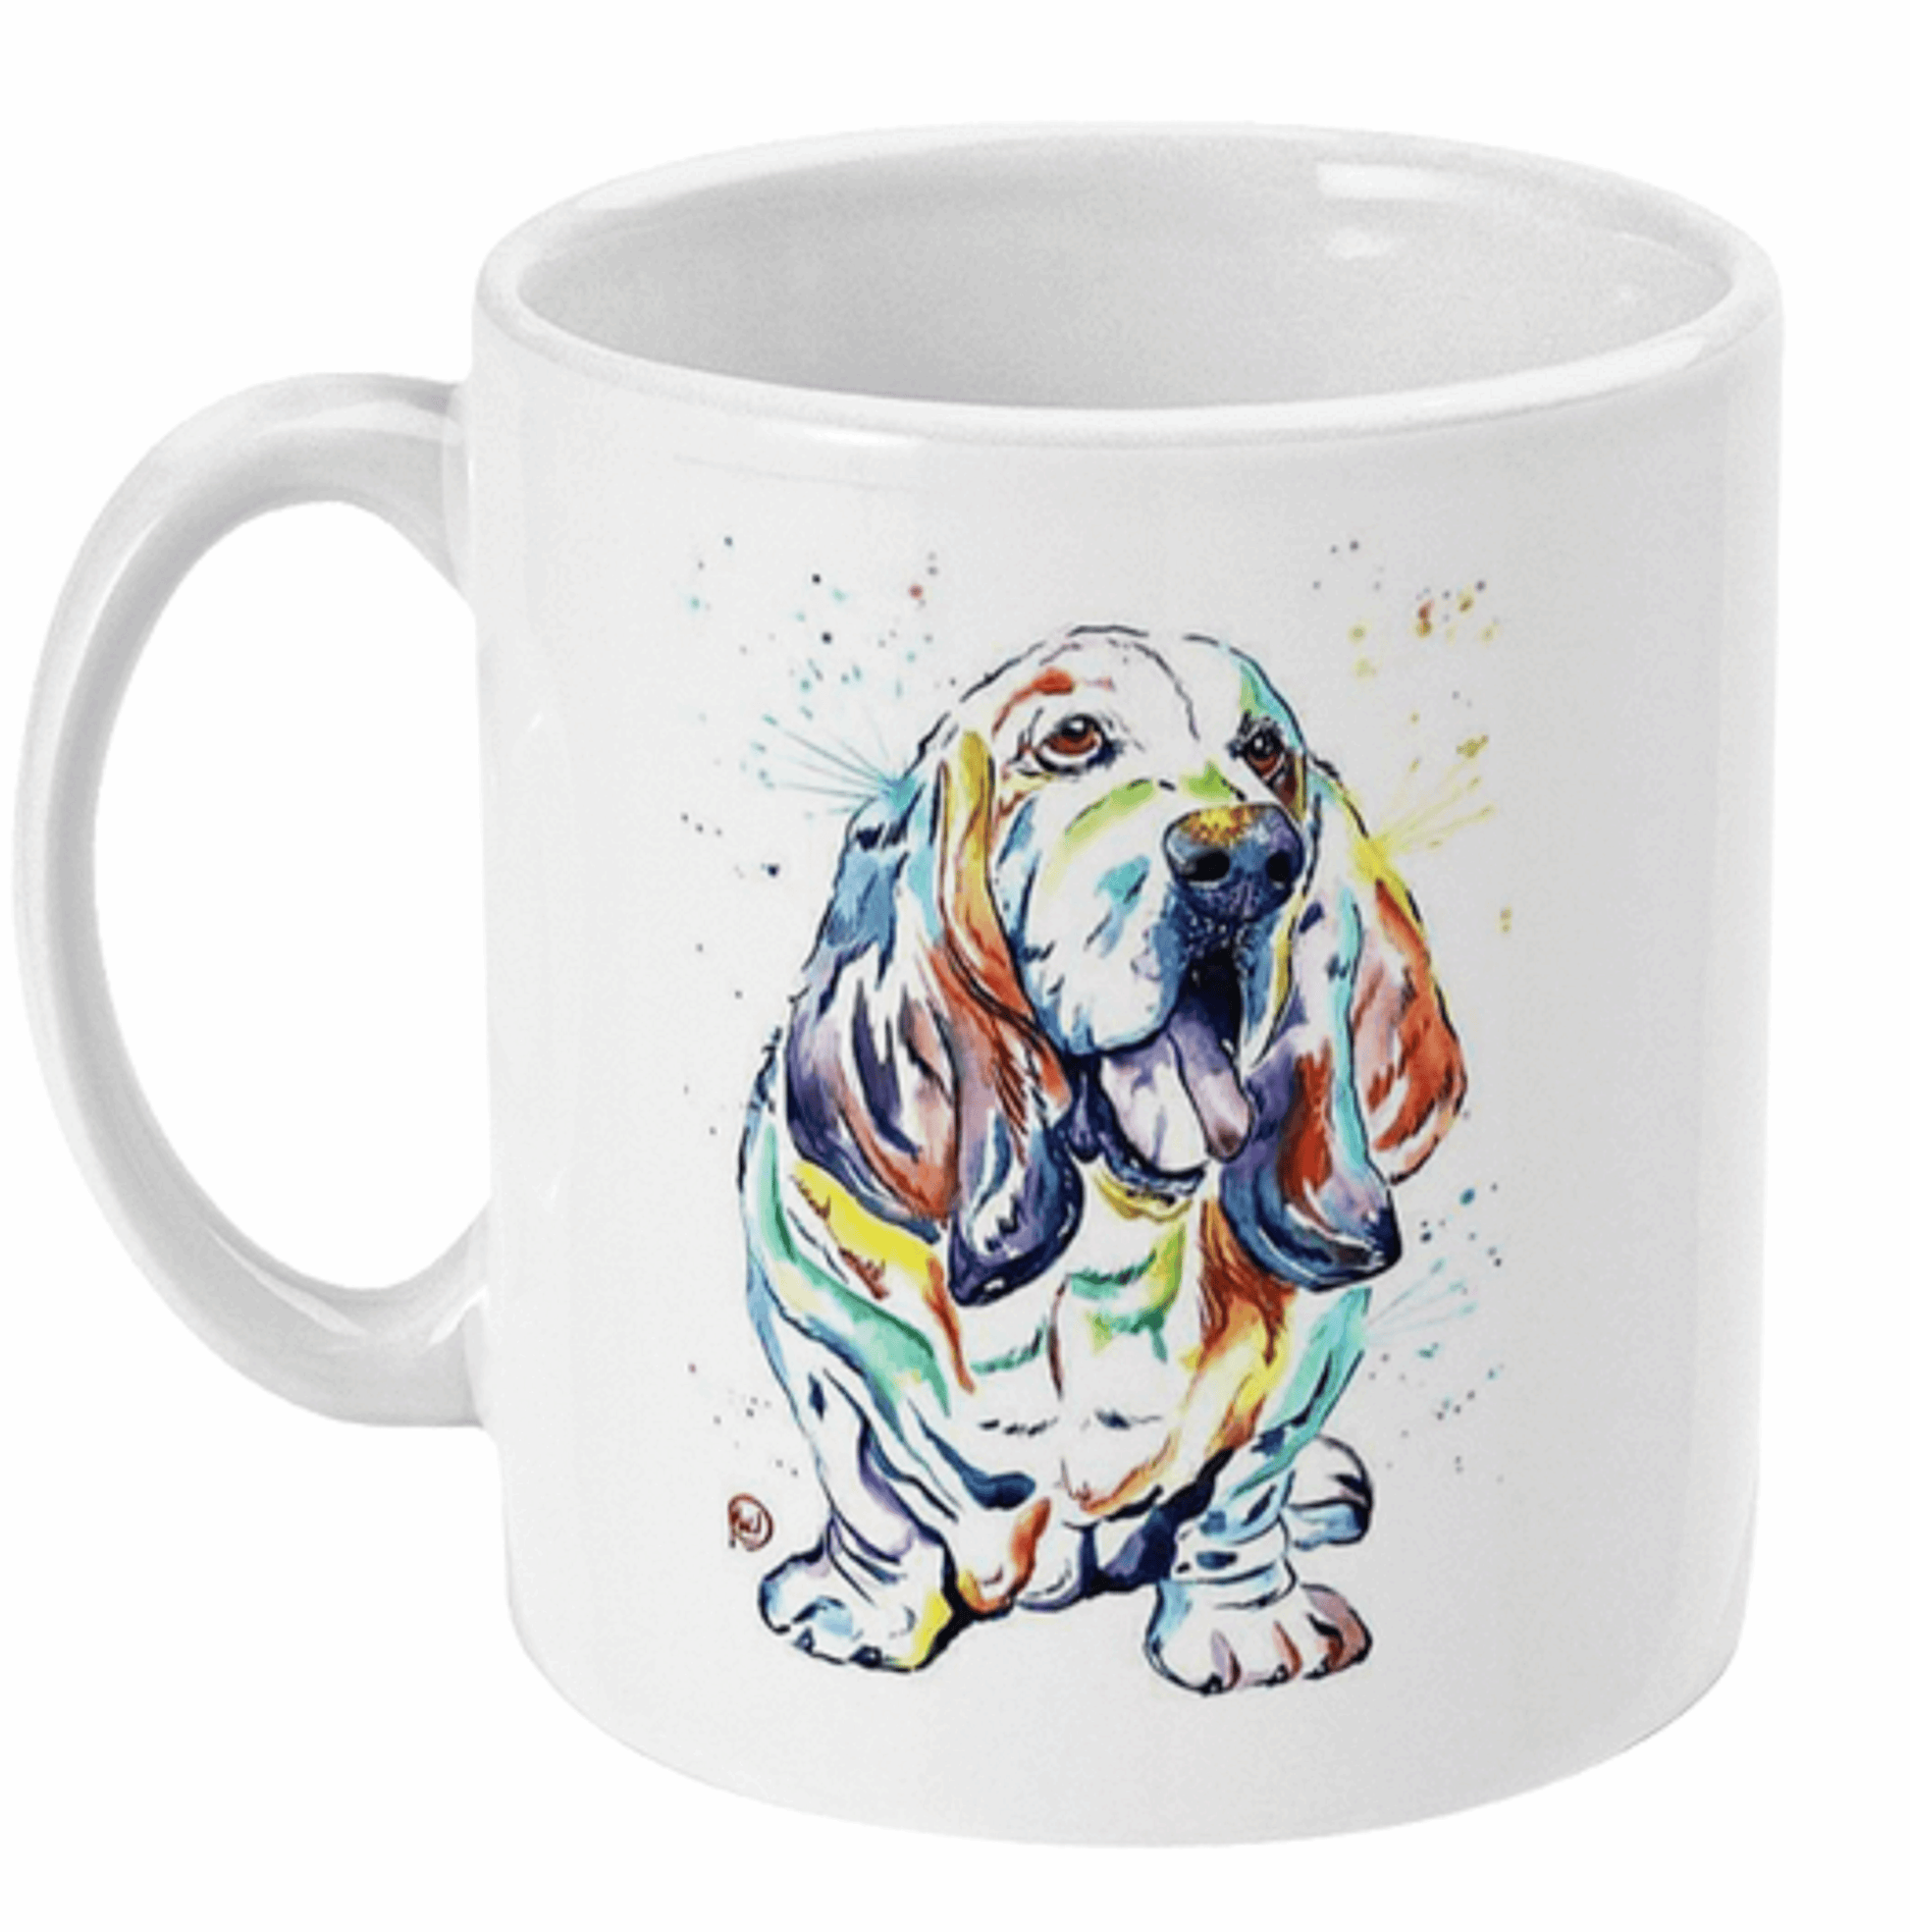  Watercolour Basset Hound Coffee Mug by Free Spirit Accessories sold by Free Spirit Accessories